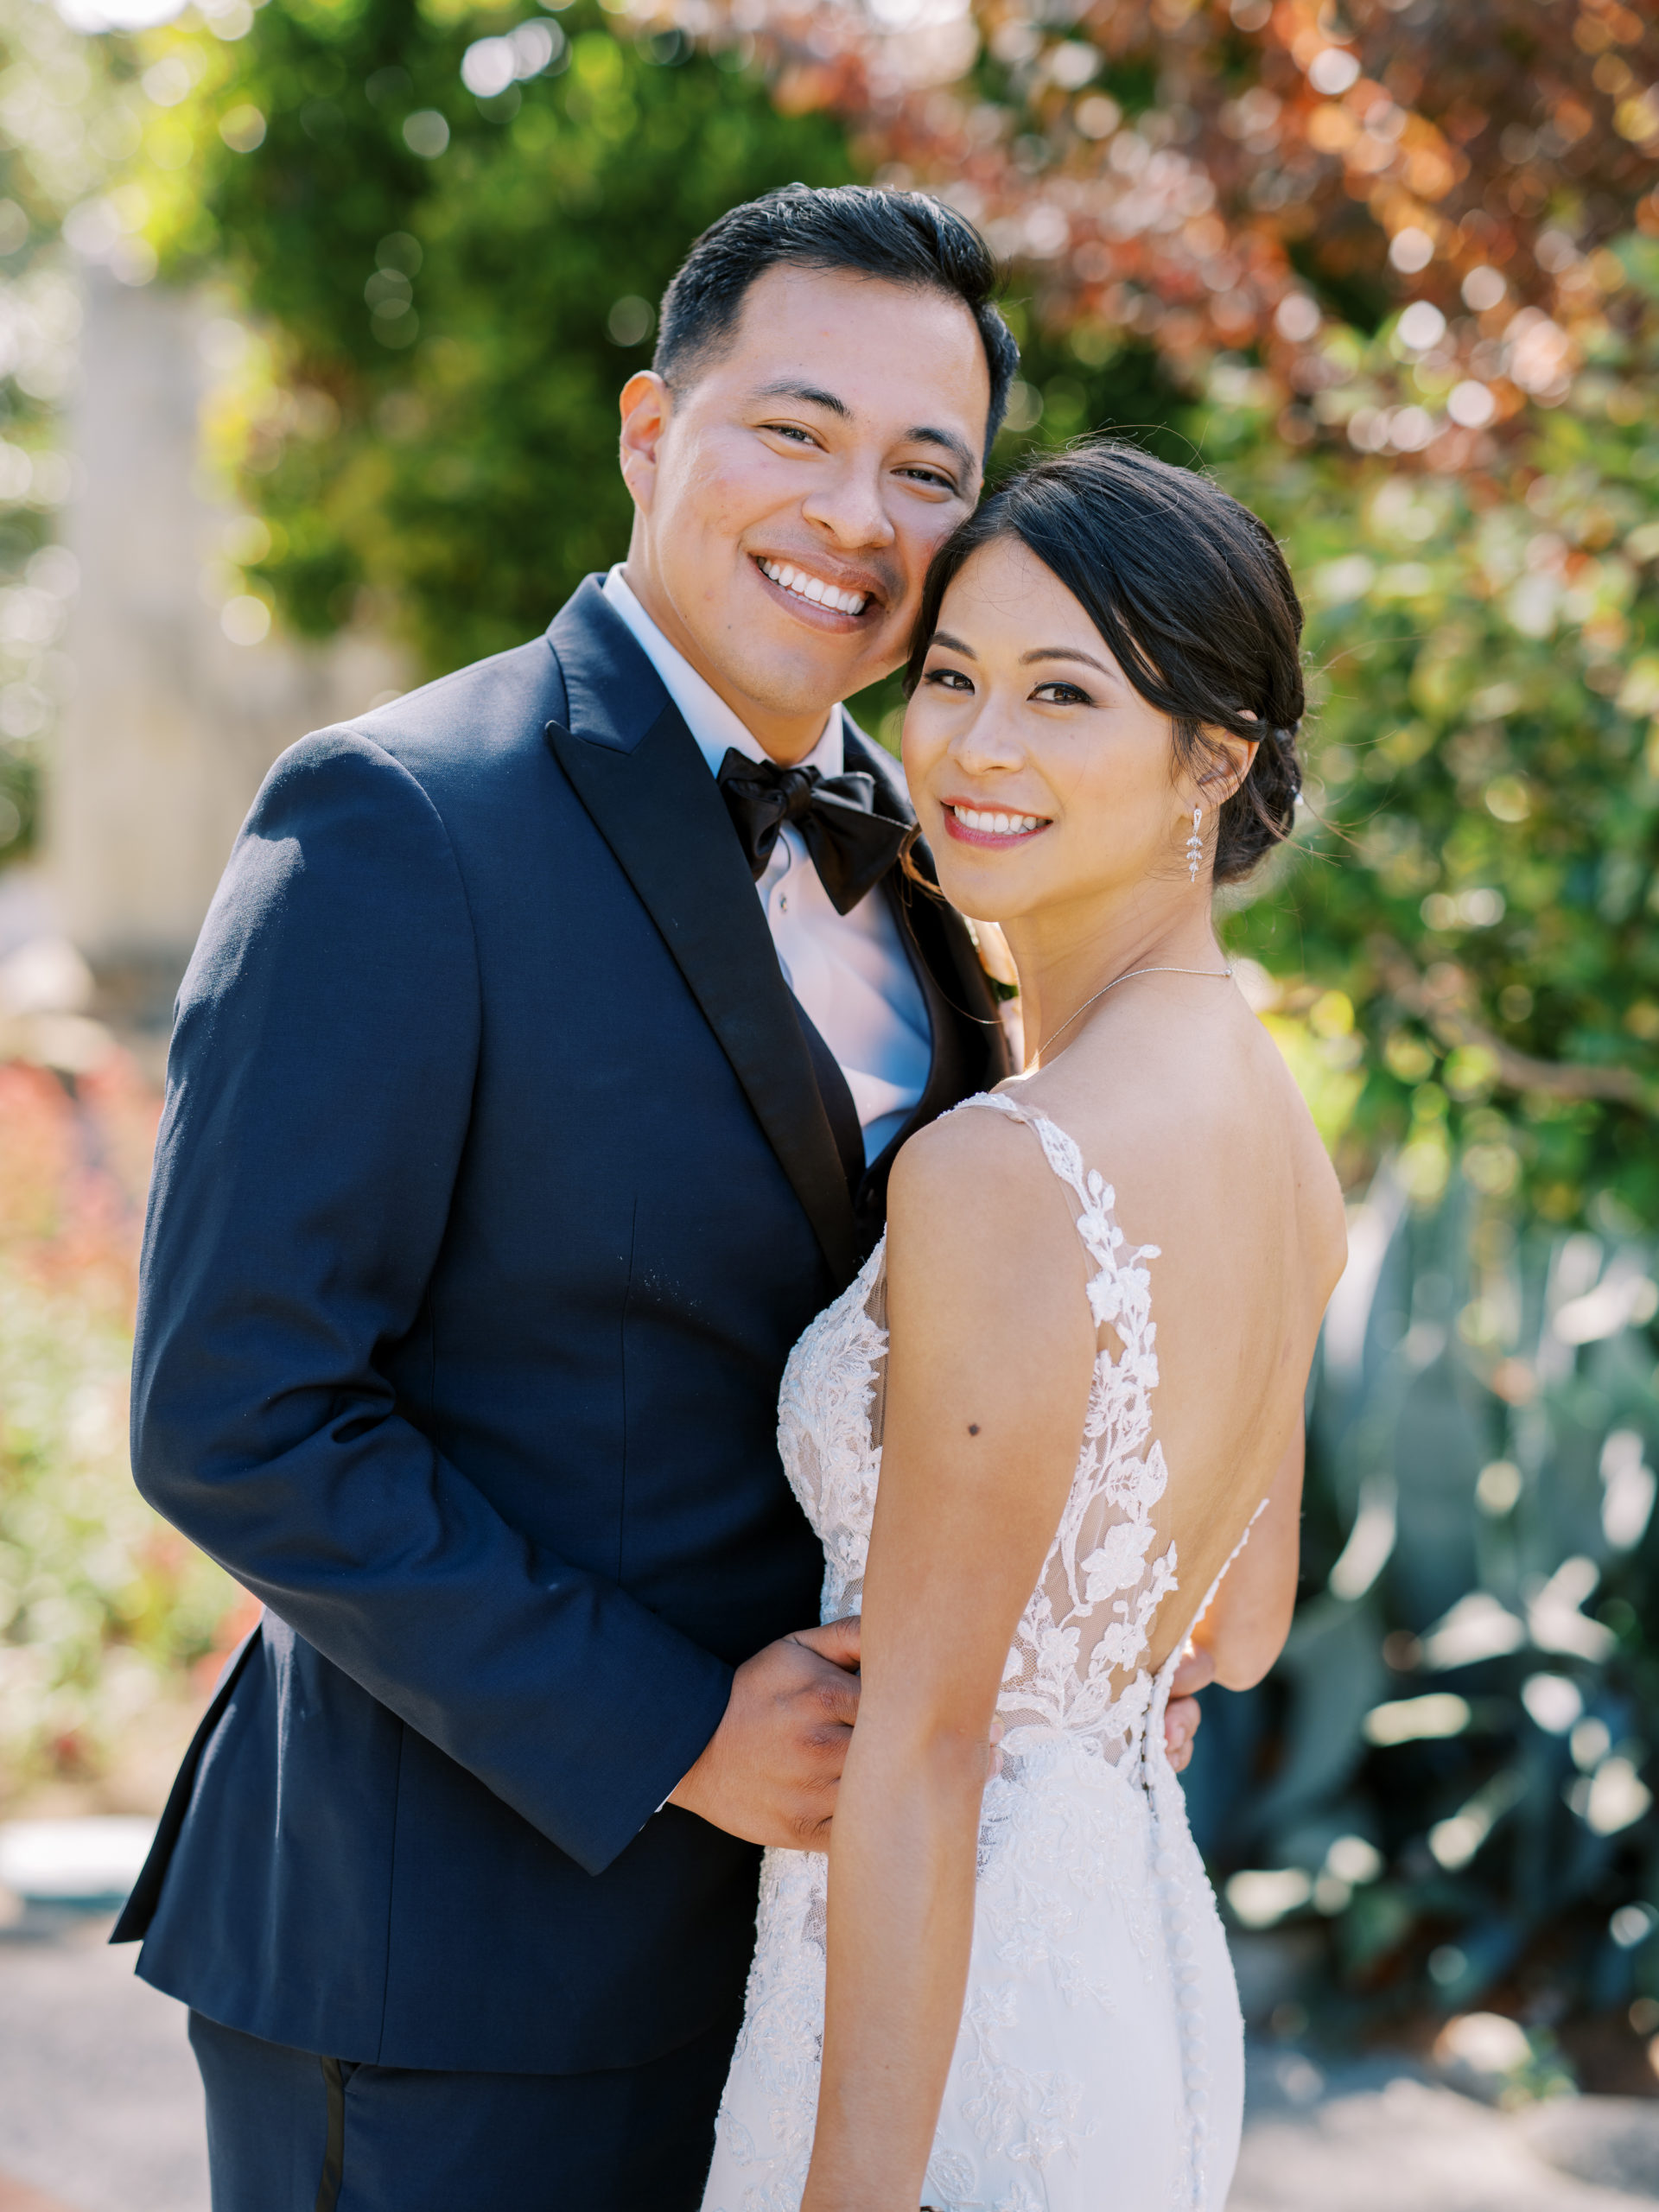 Tehama Golf Club Wedding - Bride and Groom Met at UCLA